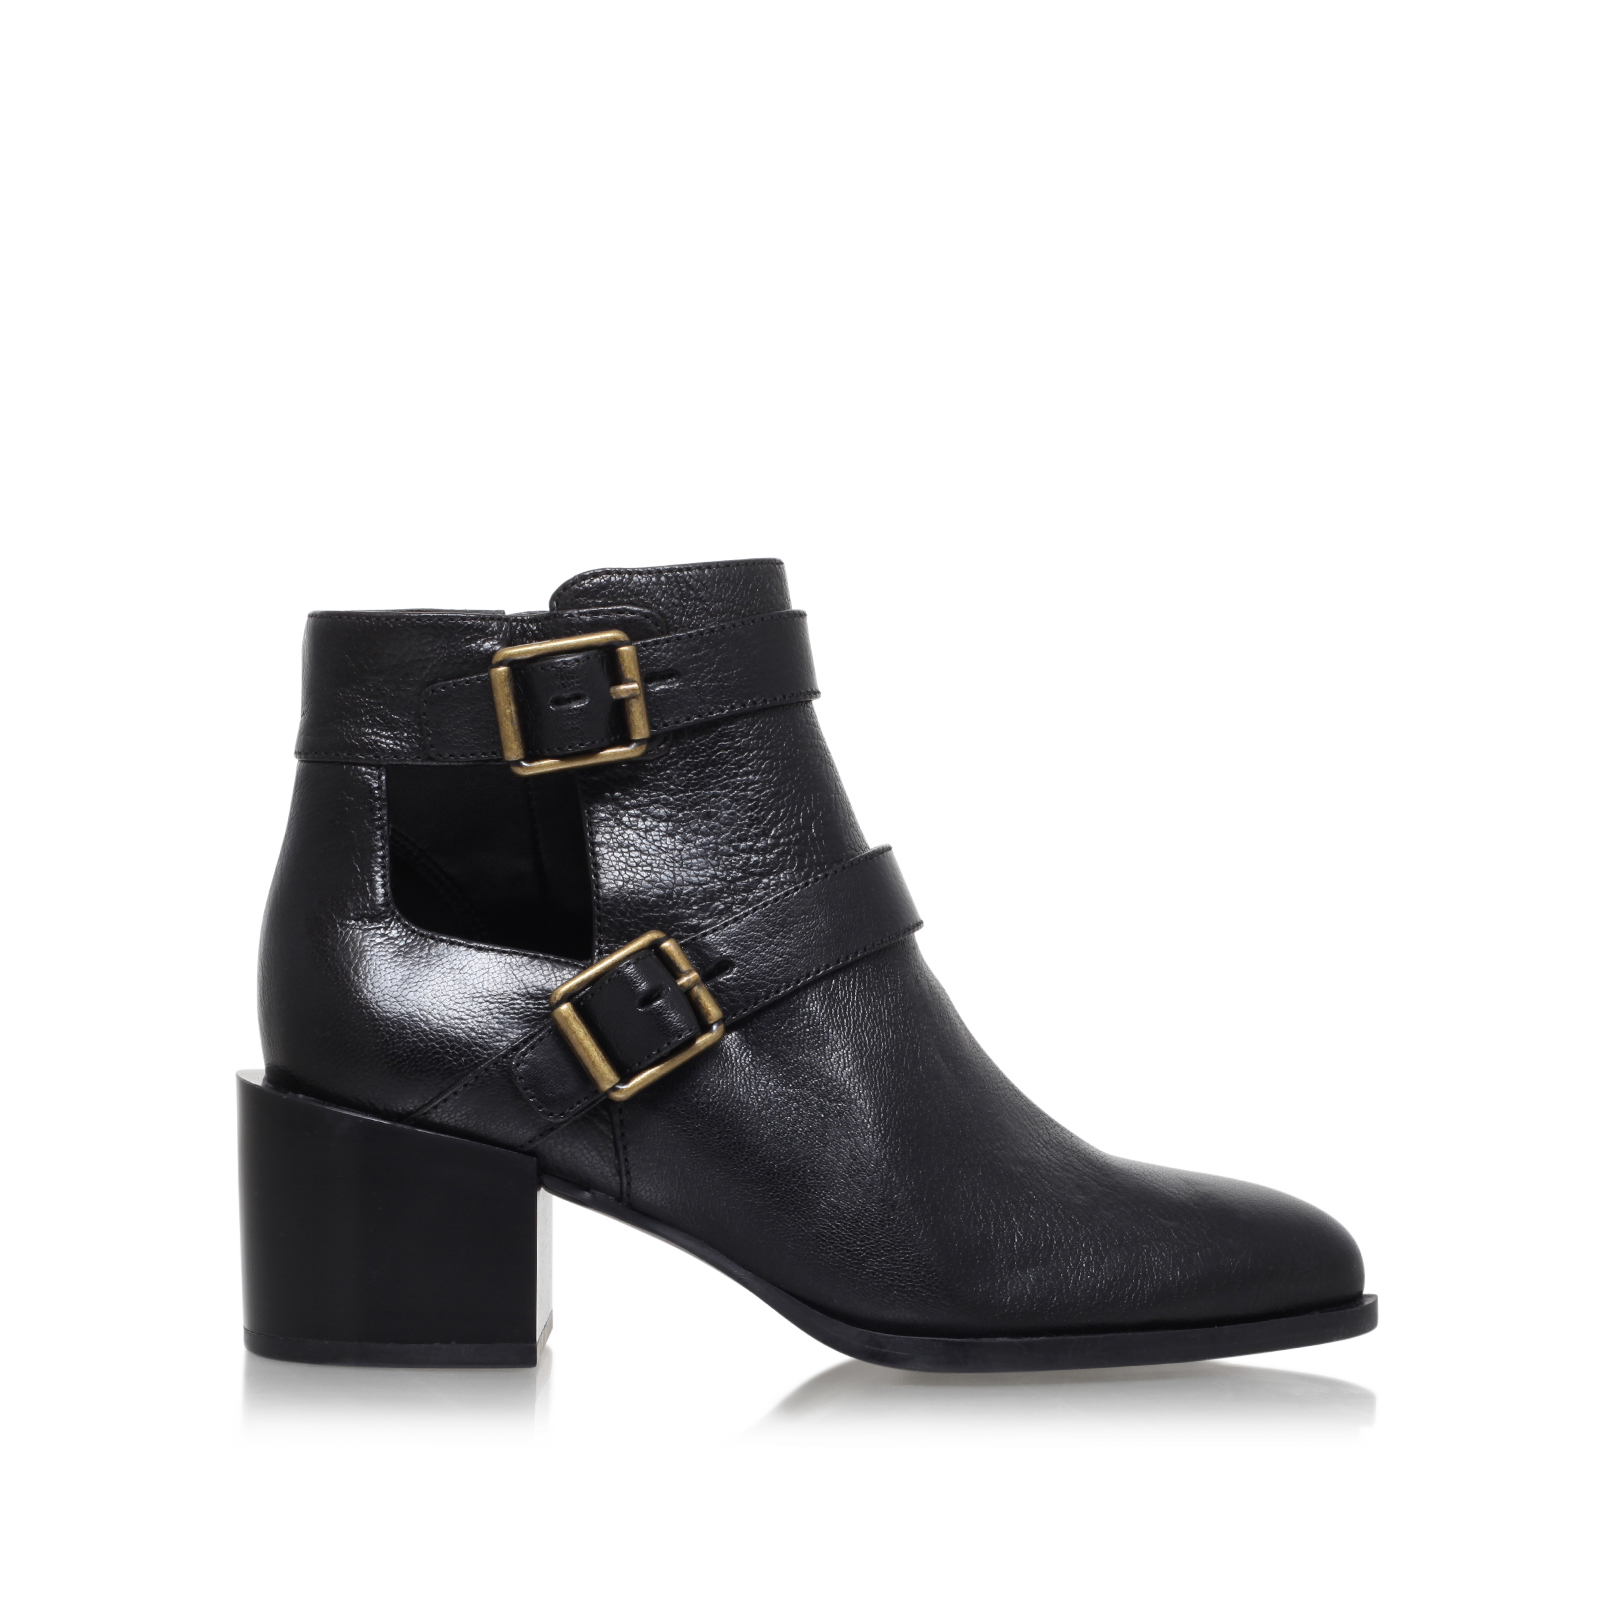 EVALEE Nine West Evalee Black Leather Mid Heel Ankle Boots by NINE WEST